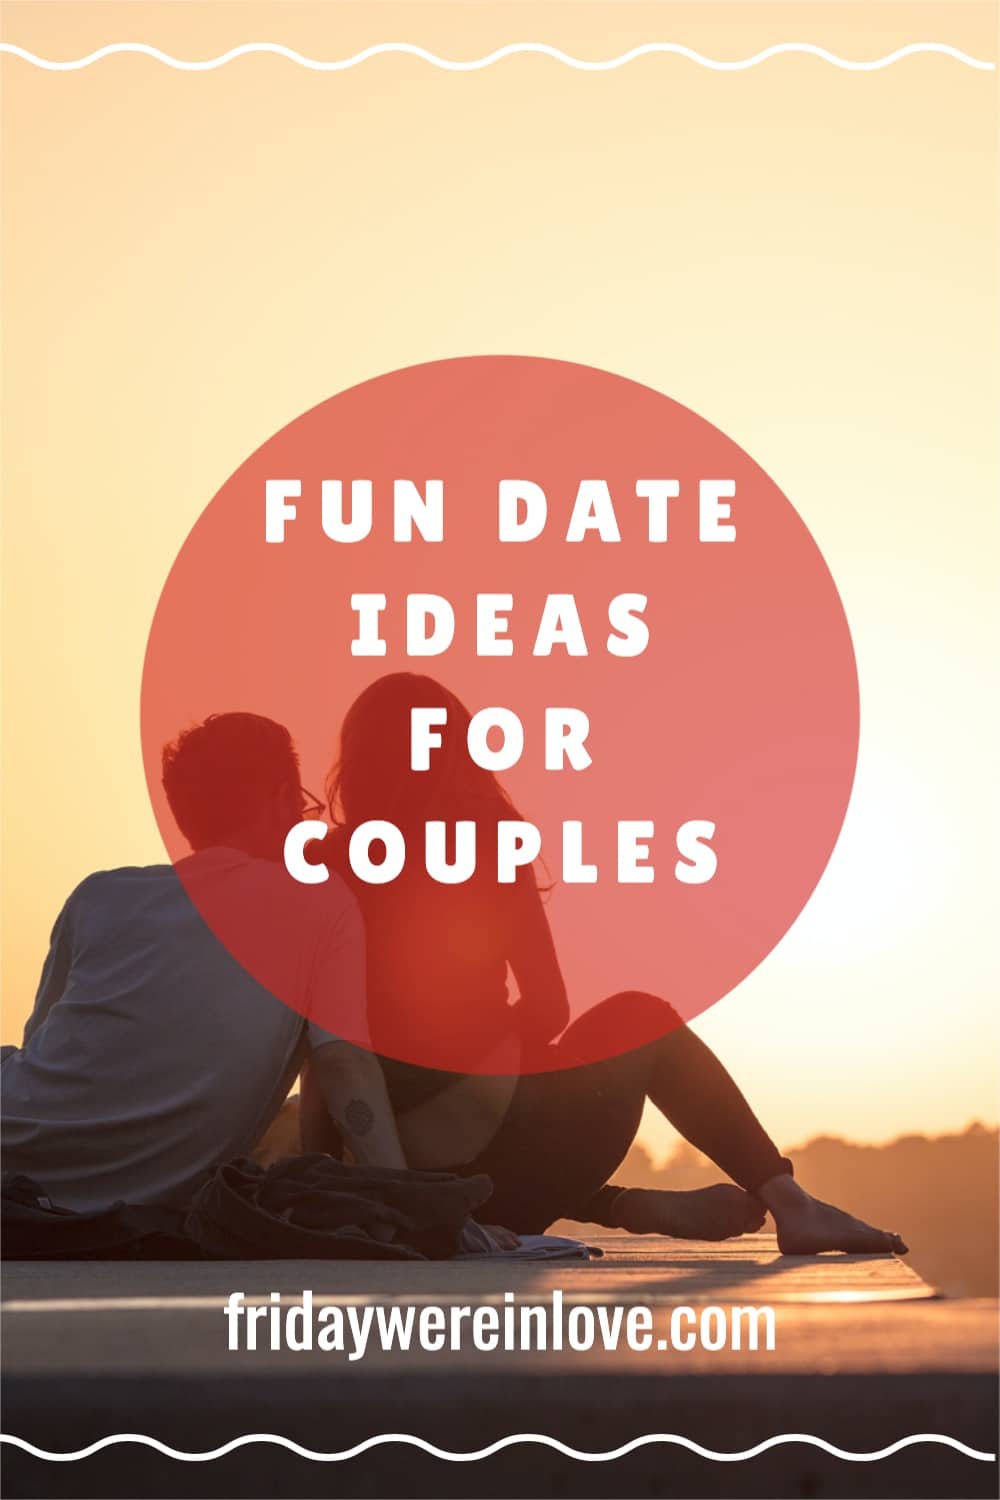 101 Date Ideas Creative And Fun Date Ideas Friday Were In Love 0490